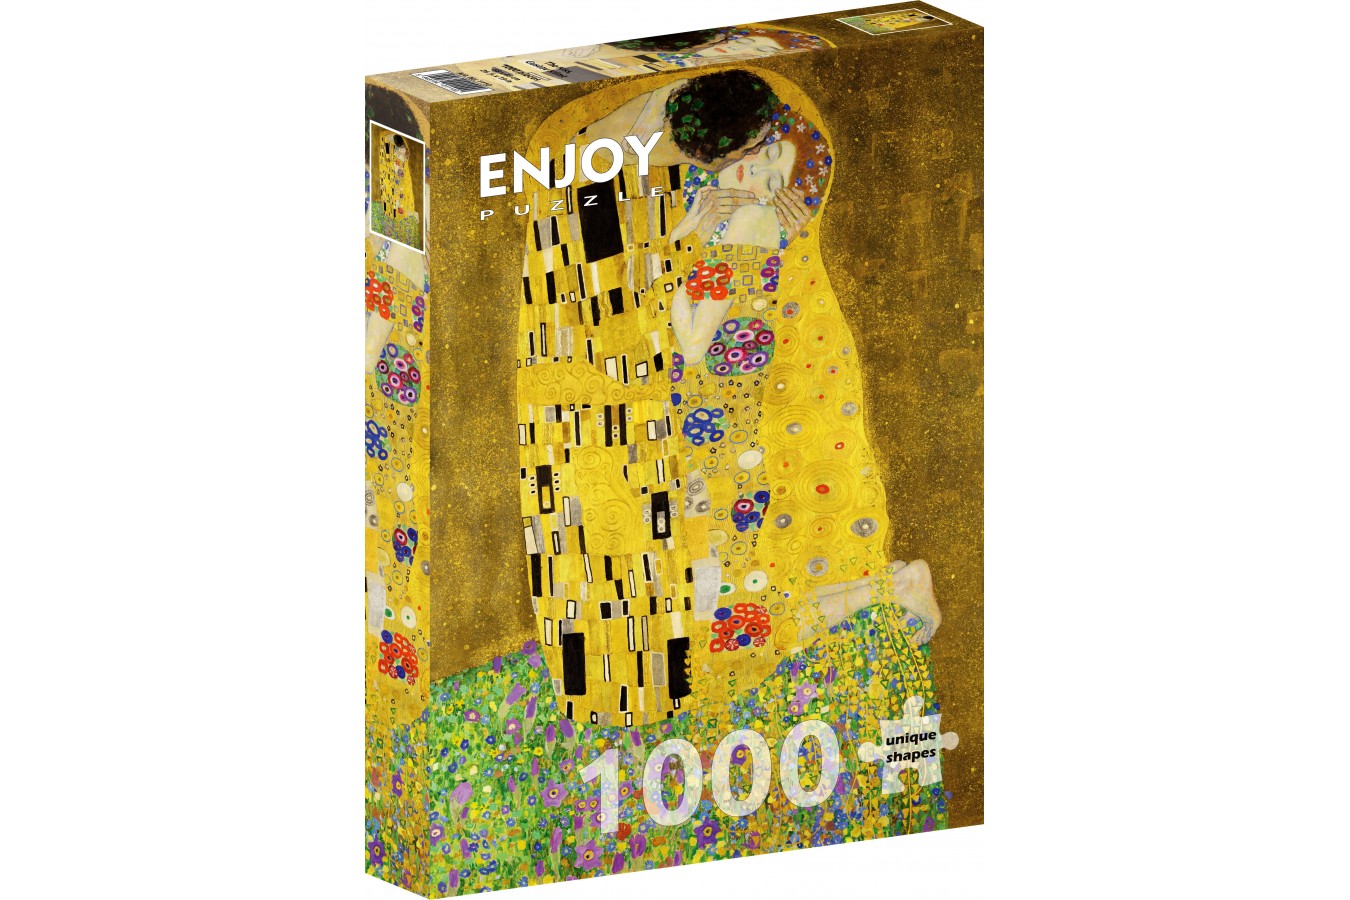 Puzzle 1000 piese - Gustav Klimt: The Kiss (Enjoy-1110)